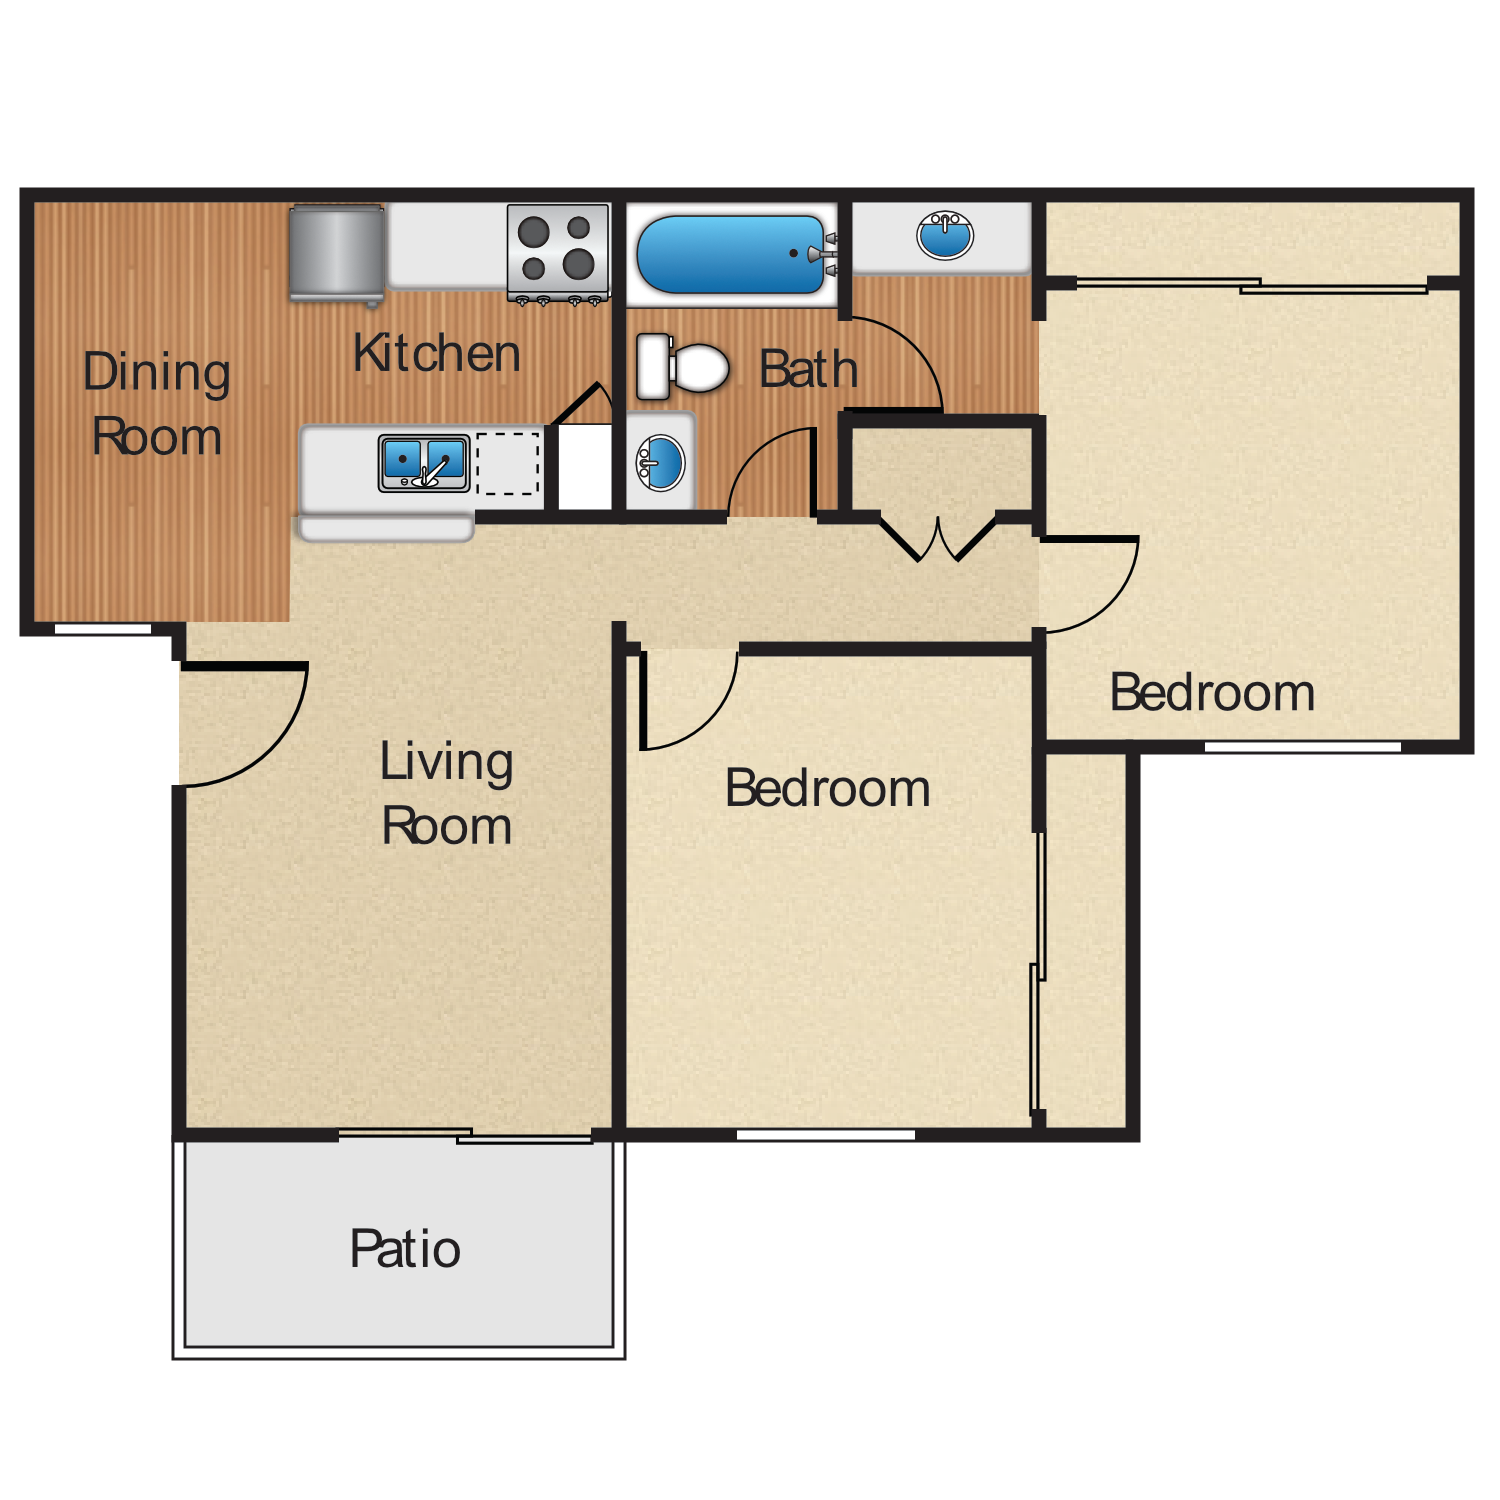 Plan C, a 2 bedroom 1 bathroom floor plan.